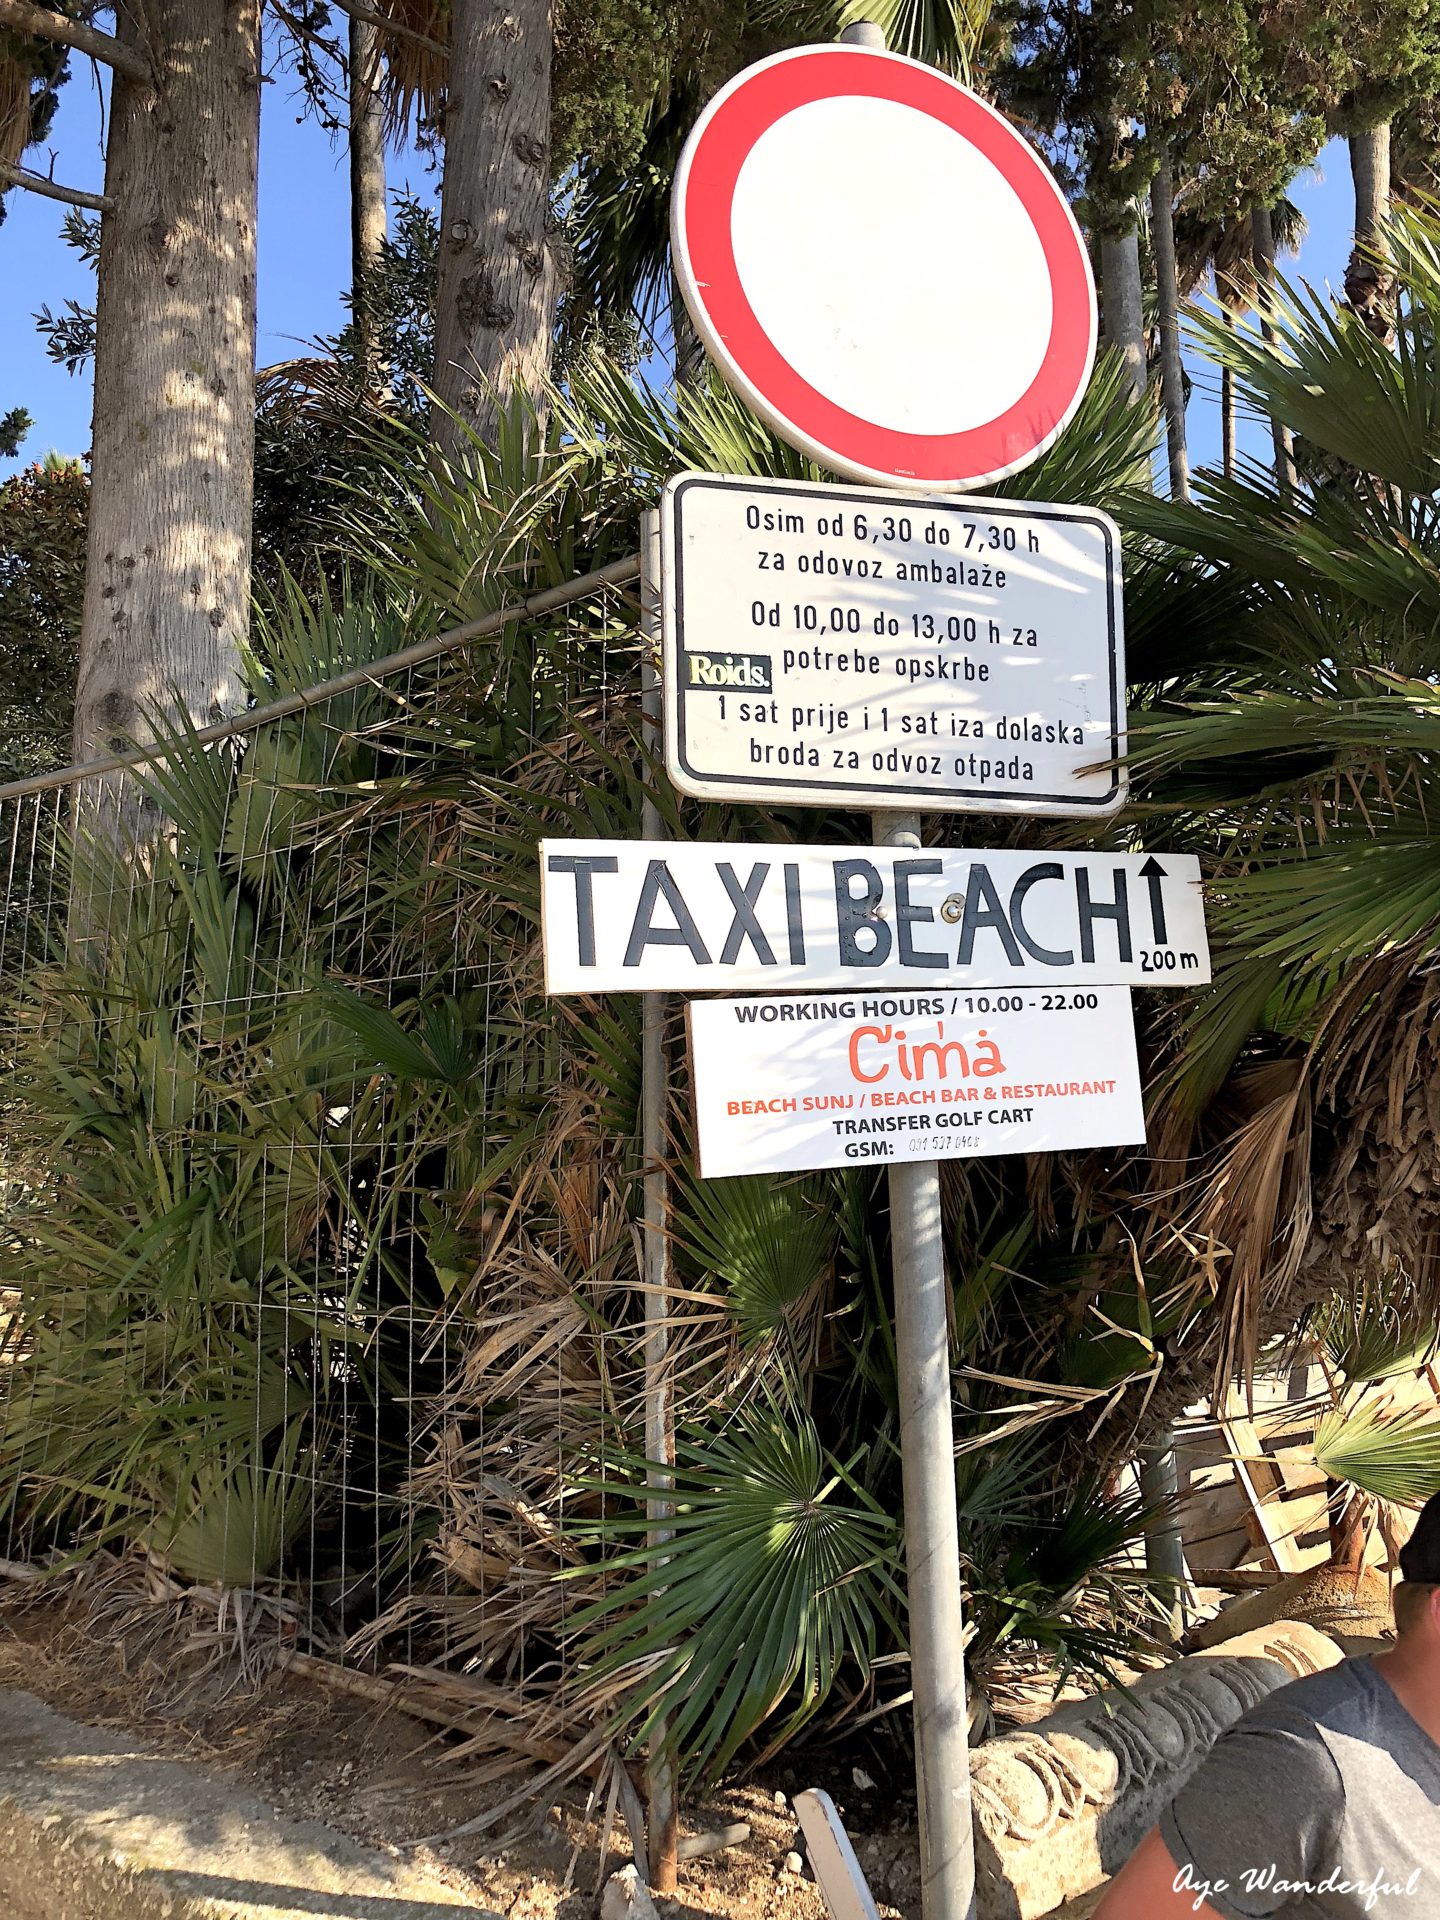 Lopud sign to Sunj beach